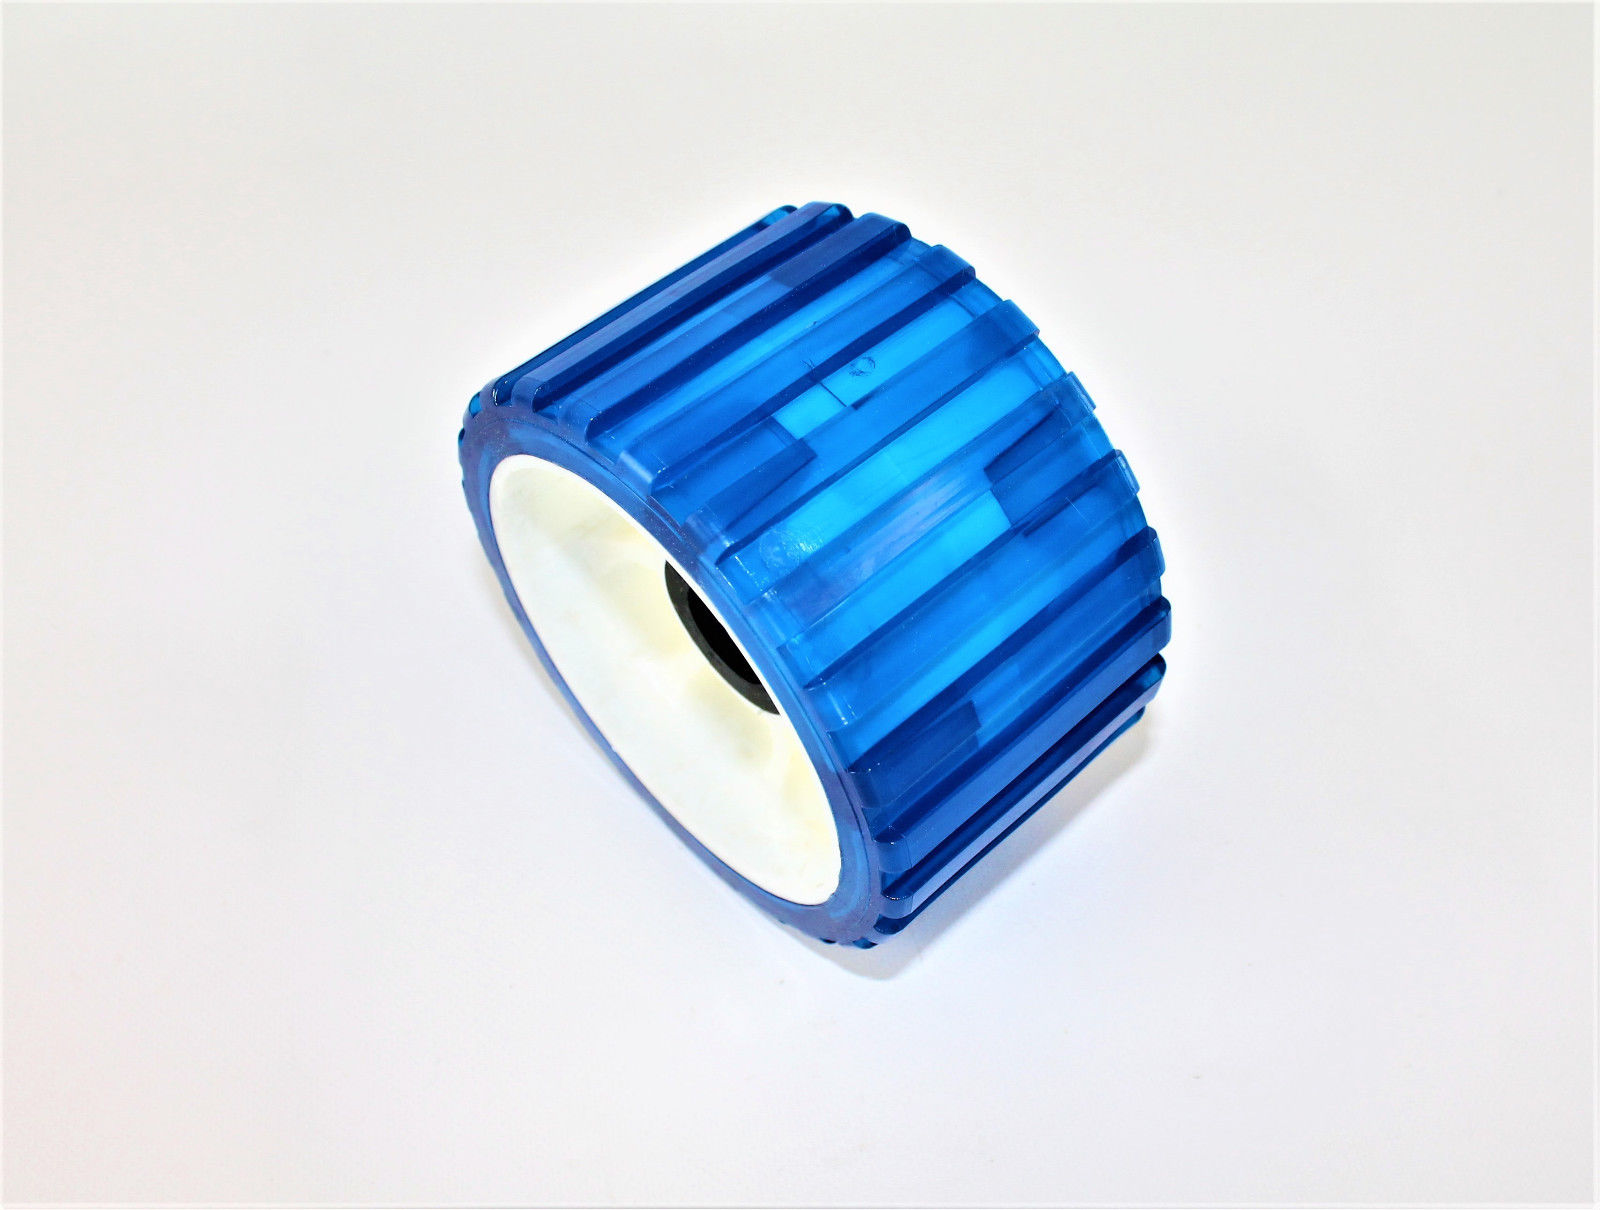 Sliprolle Bootsauflage Kielrolle Rolle aus Polyvinyl Farbe blau Neu L 1064018 